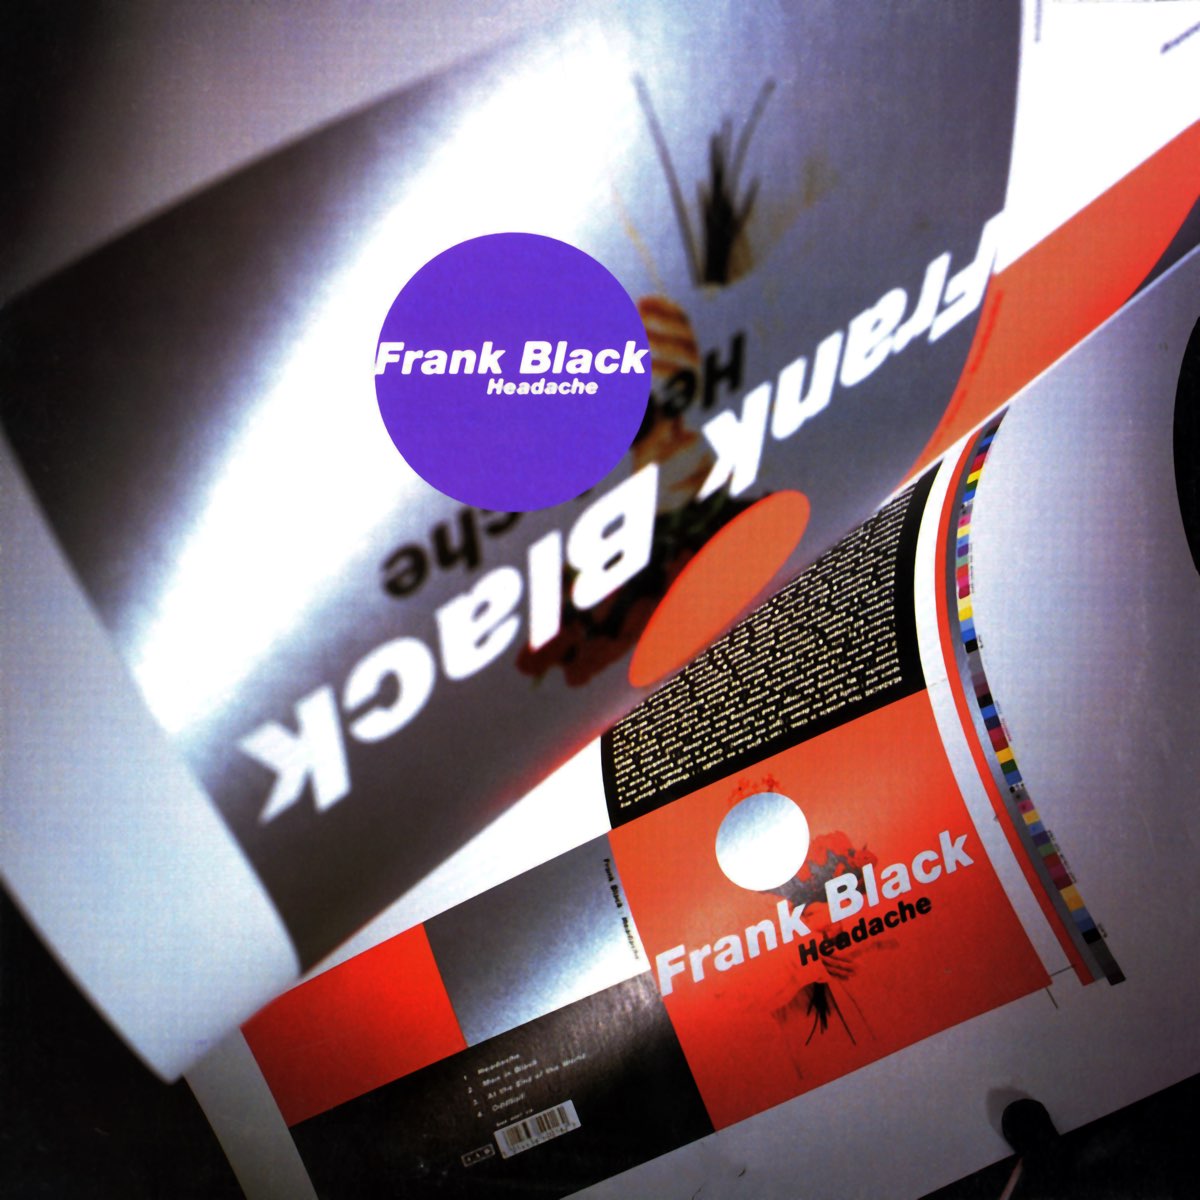 Frank Black – Frank Black альбом. Frank Black Vinyl Black. Frank Black Vinyl Black Day. Frank Black fast man.